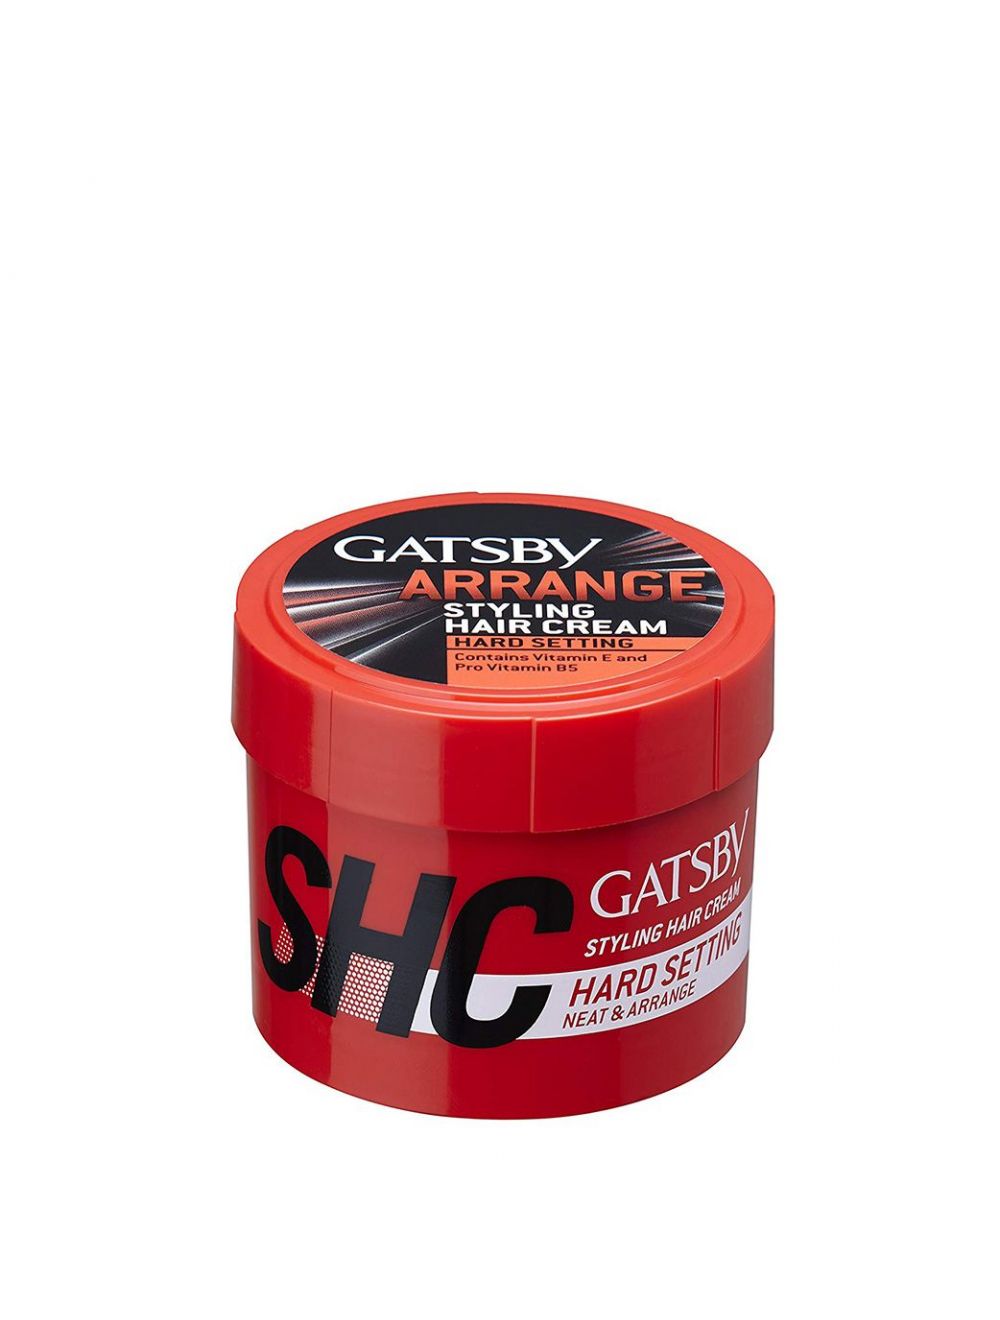 Gatsby Styling Hair Cream Hard Setting Neat & Arrange (250gm) - Niram